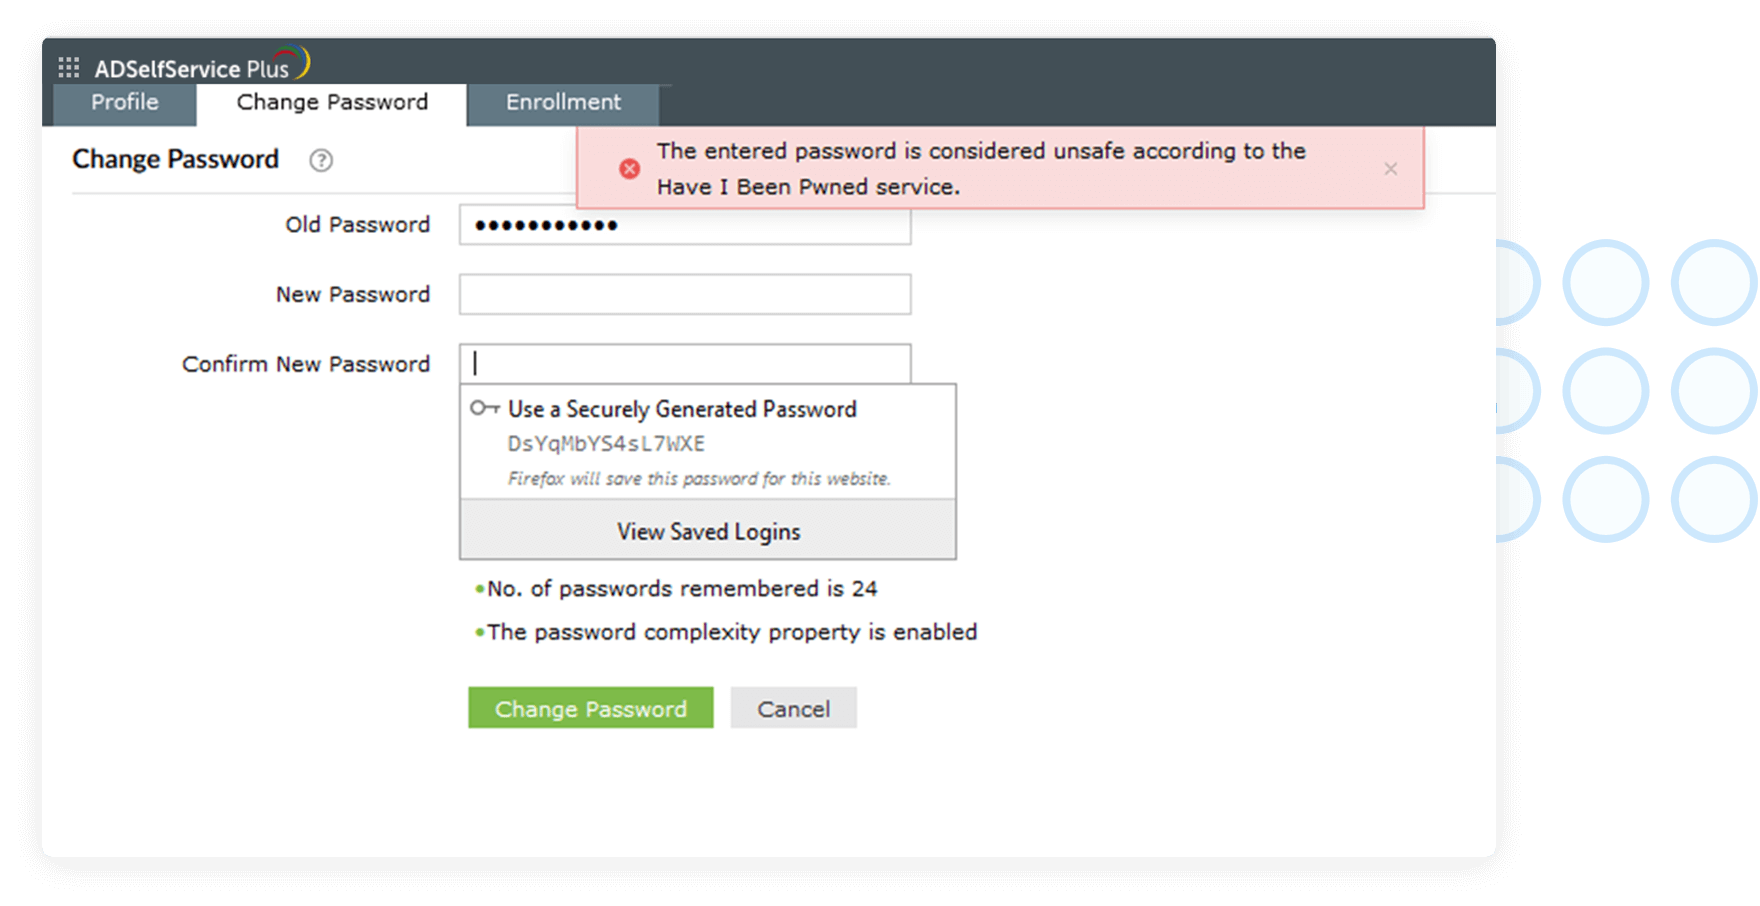 Restrict compromised passwords